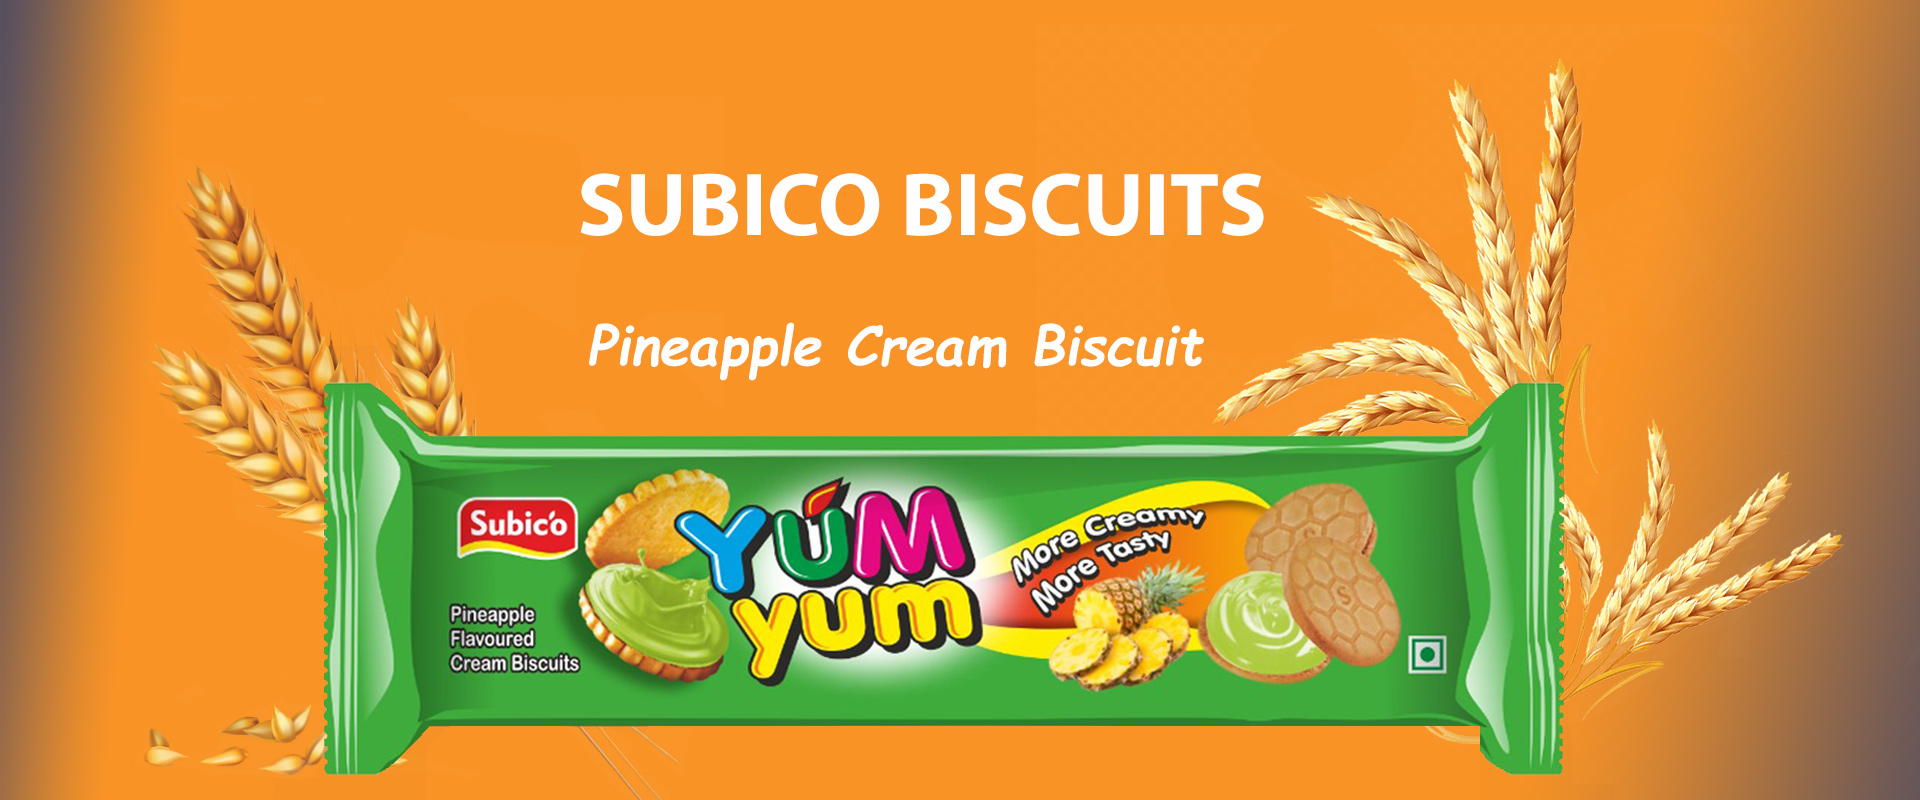 Pineapple Cream Biscuit Manufacturer